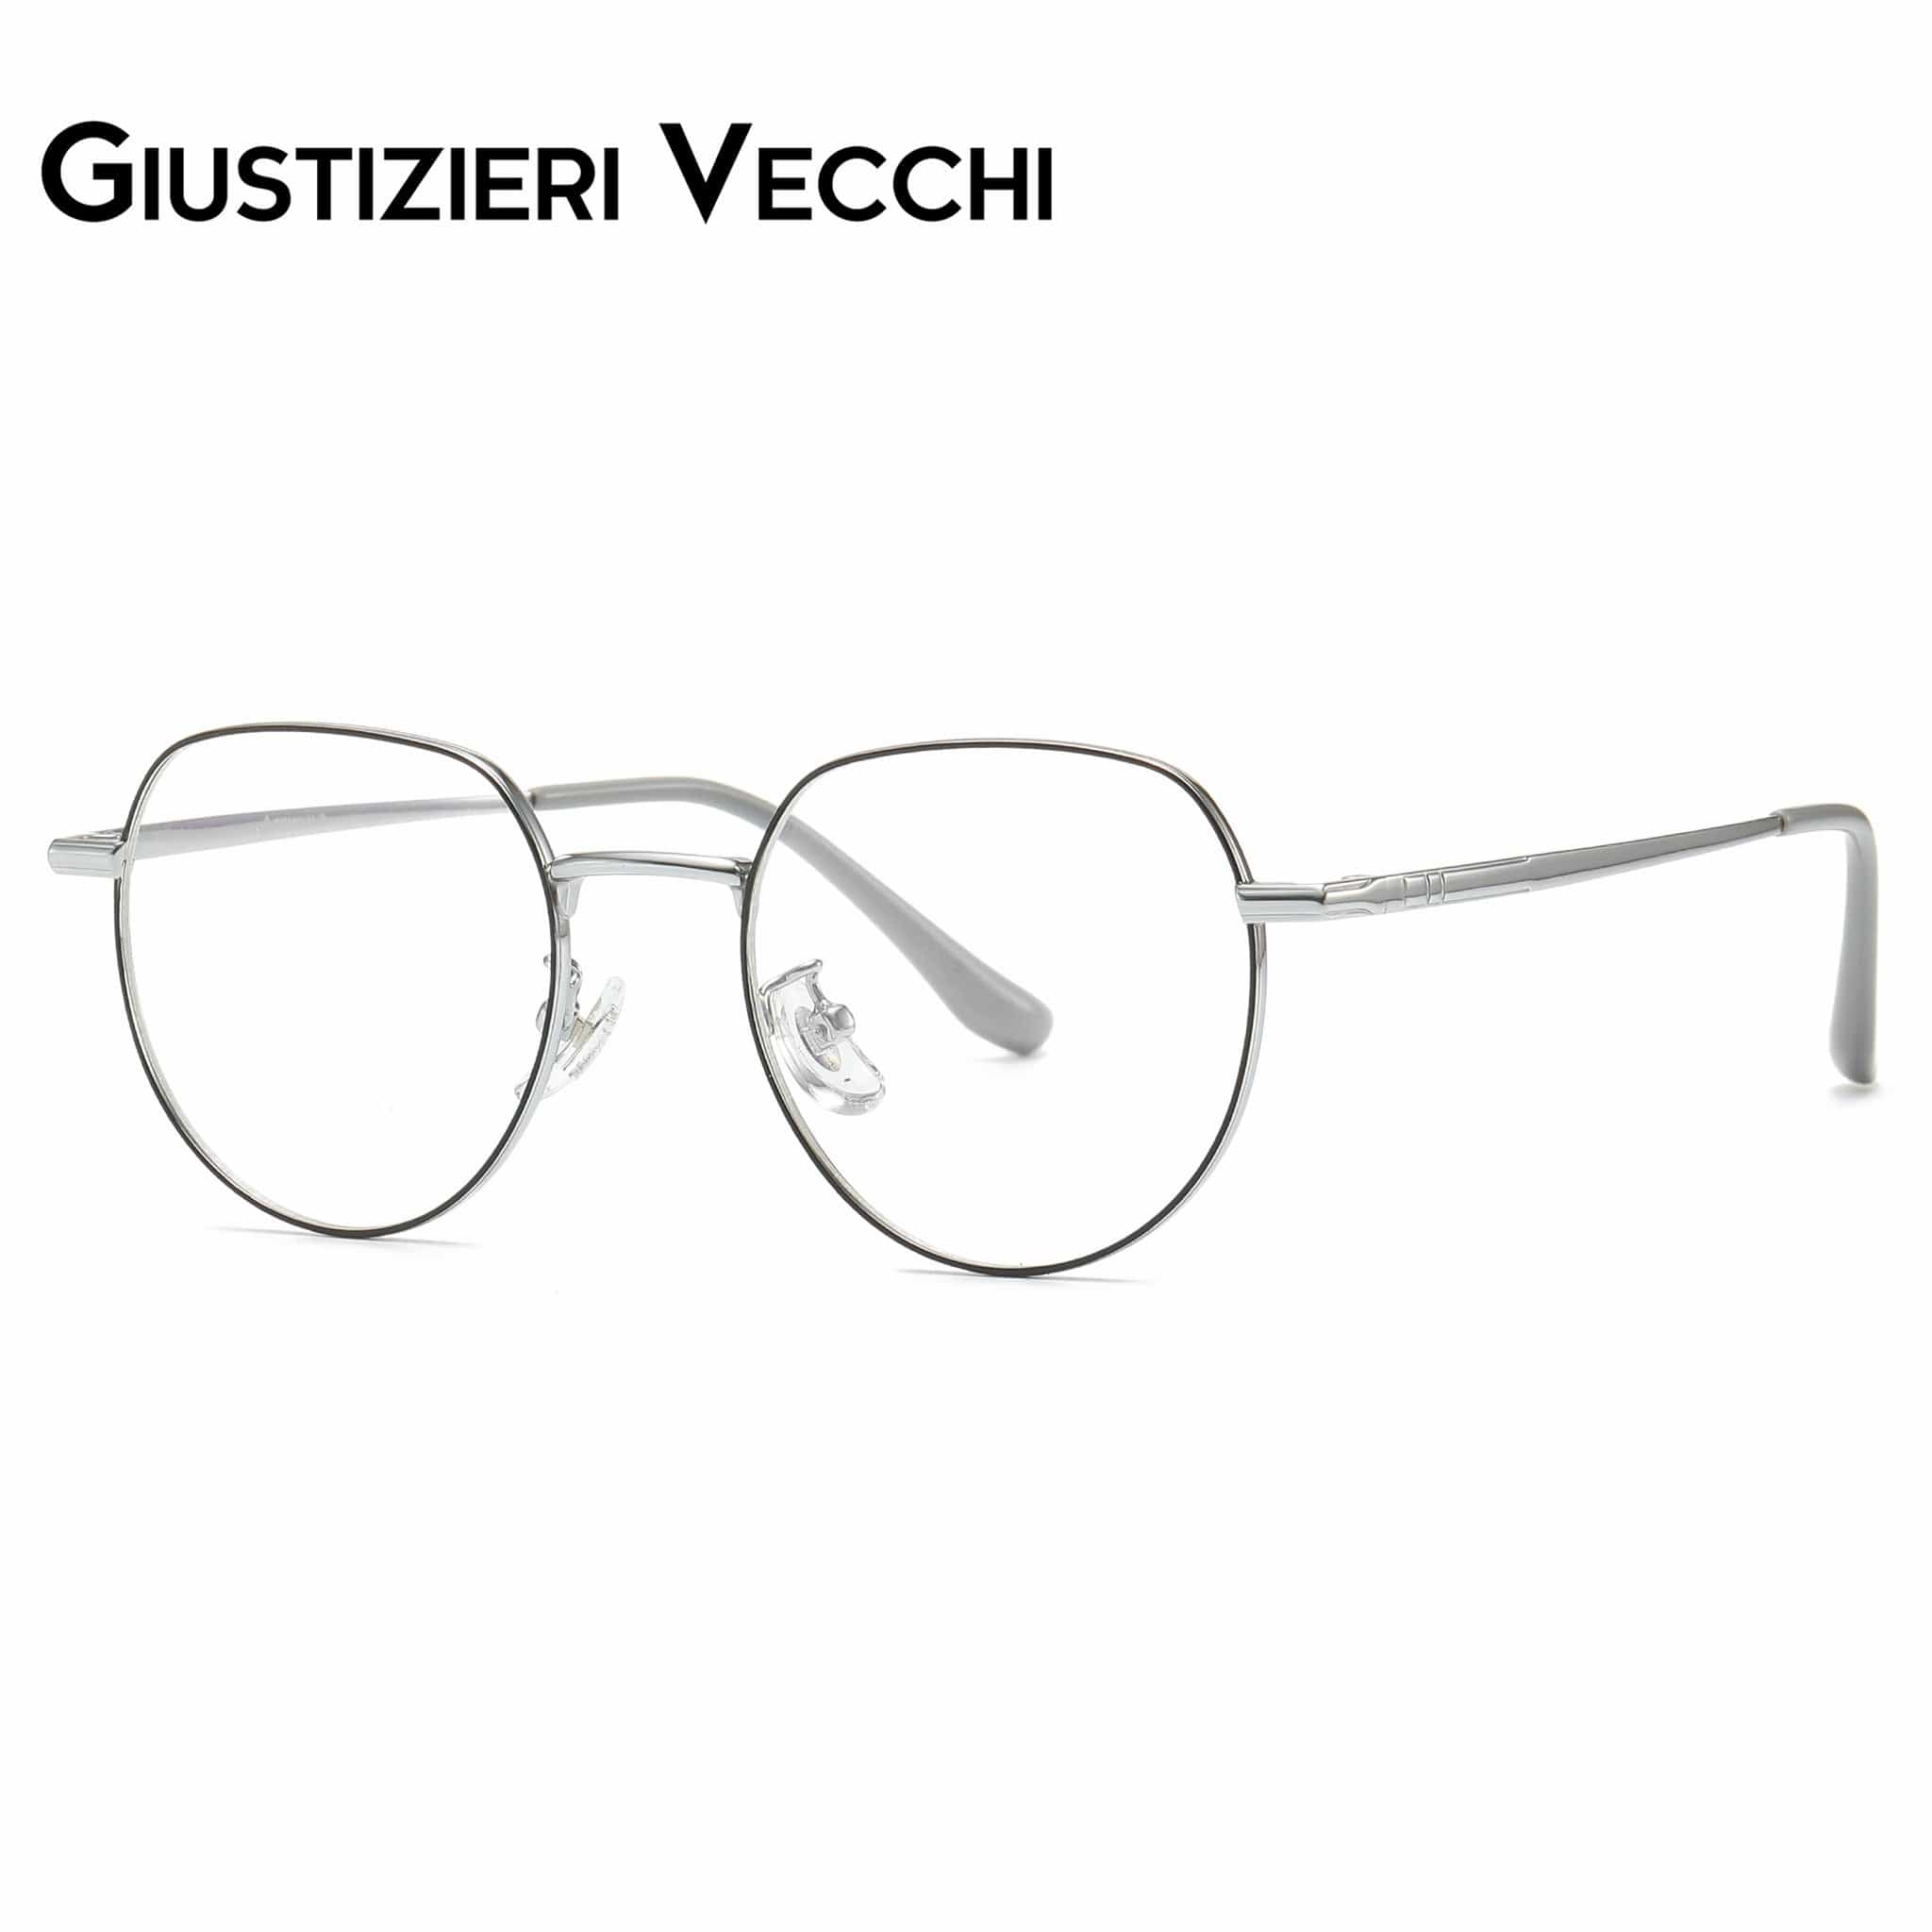 GIUSTIZIERI VECCHI Eyeglasses LunarTide Duo